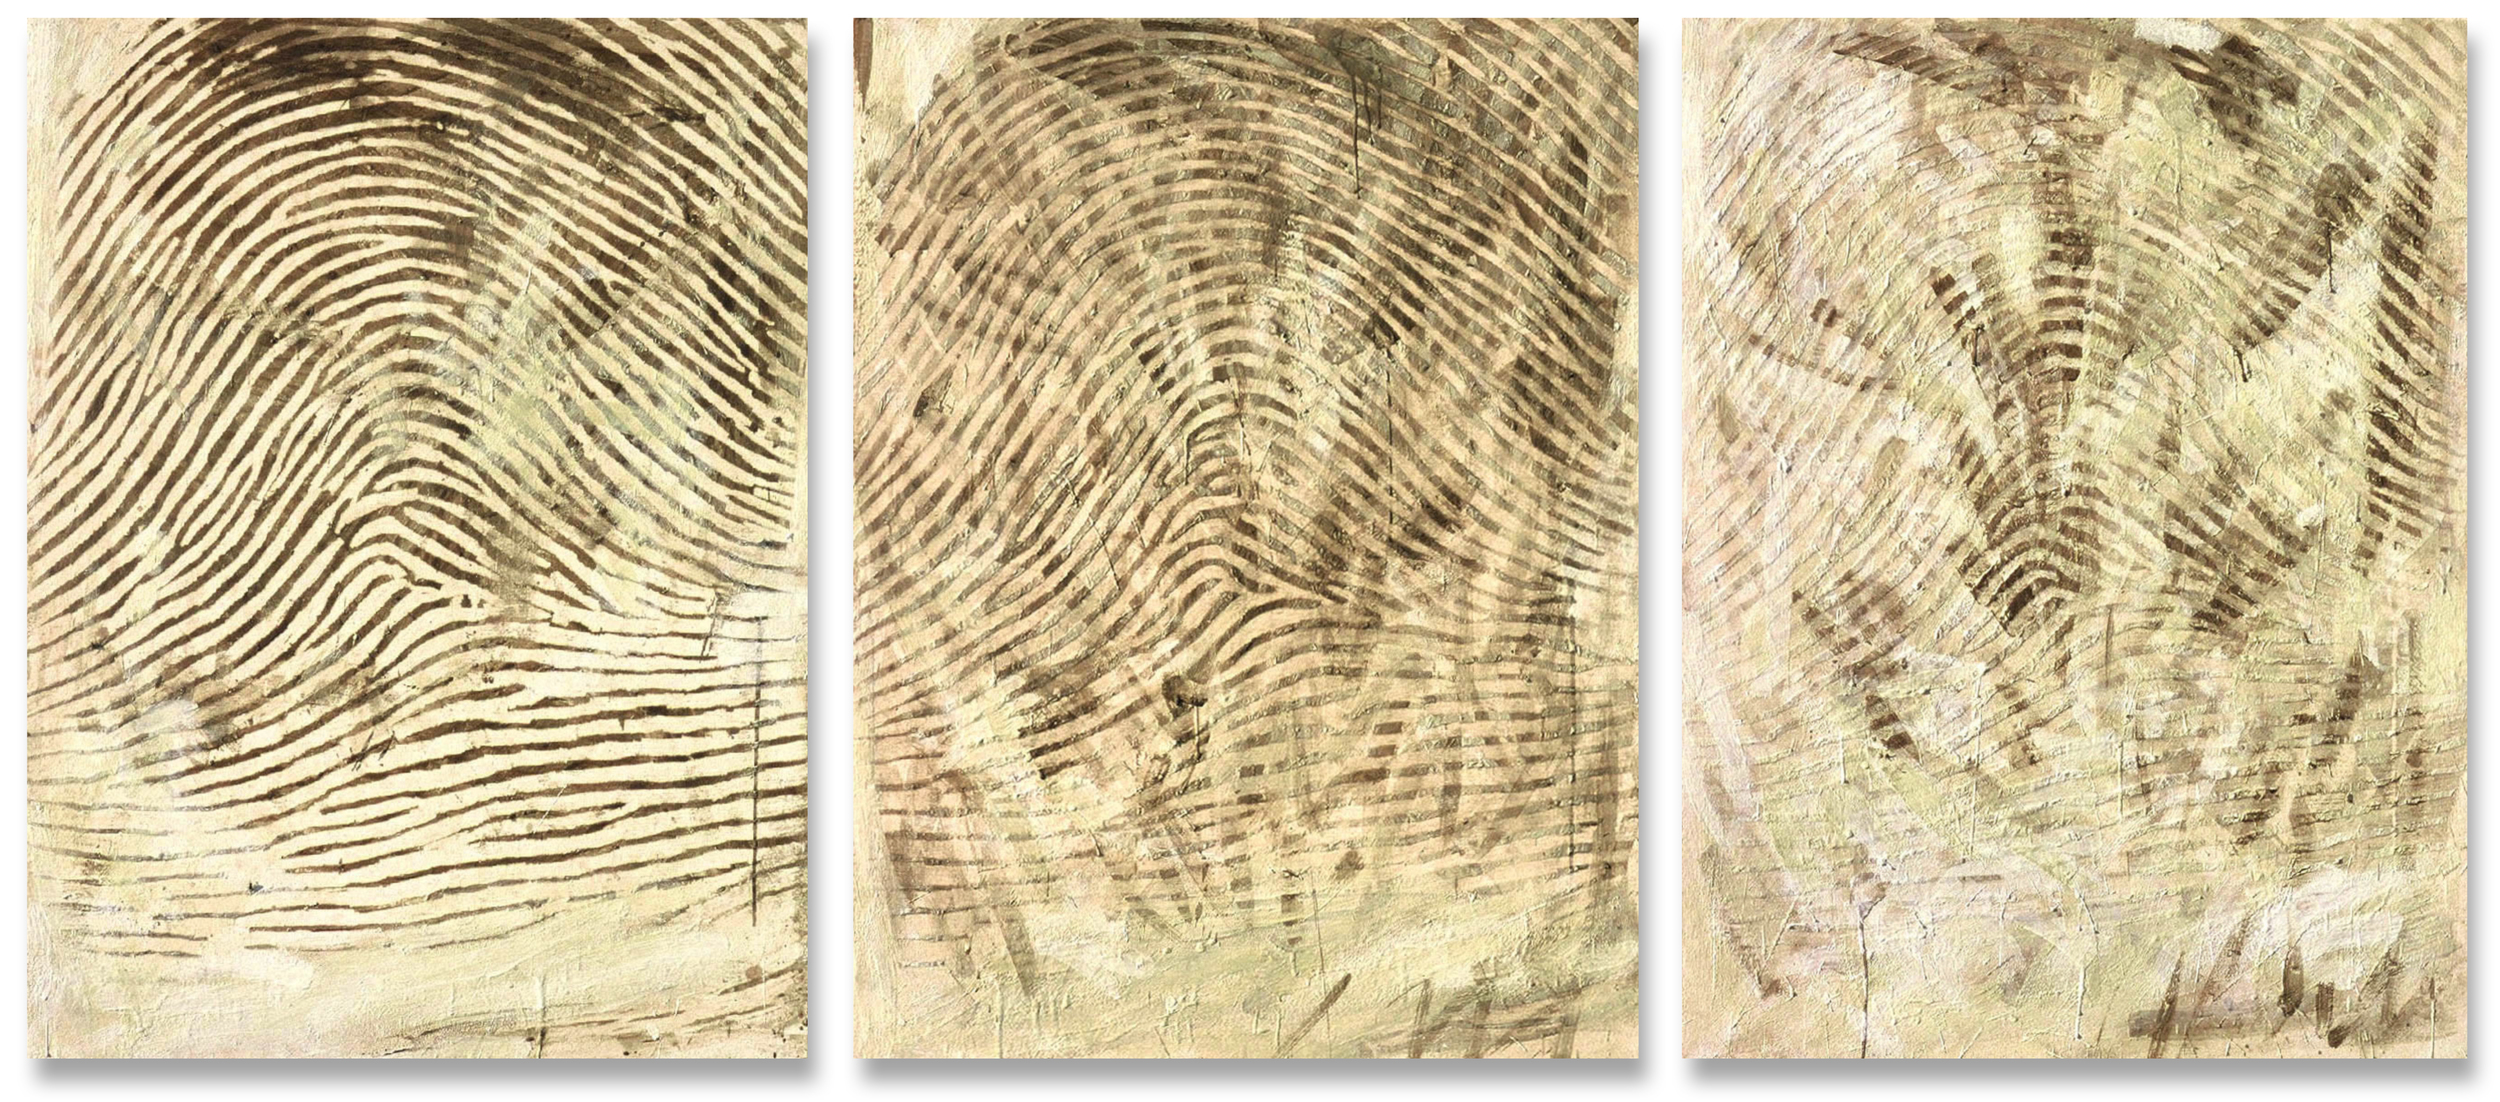 Problems in Fingerprinting the Dead, 2001